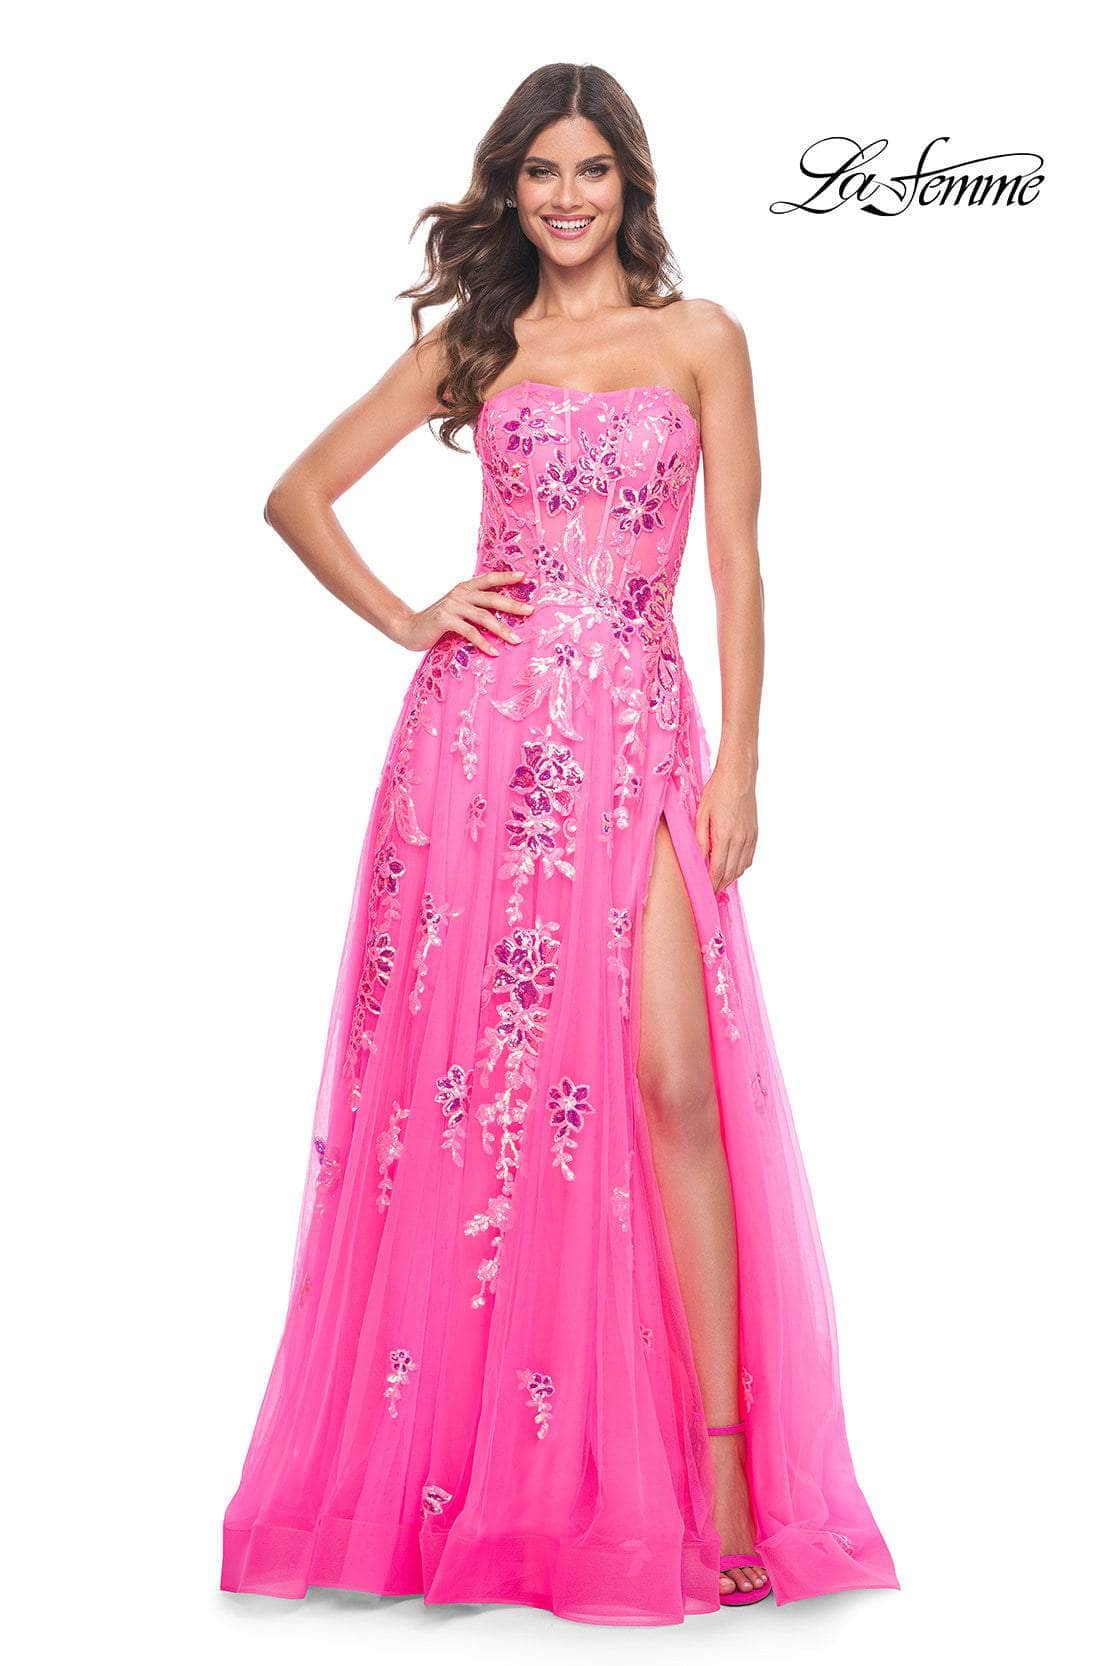 La Femme 32137 - Strapless Sequin Floral Prom Gown
